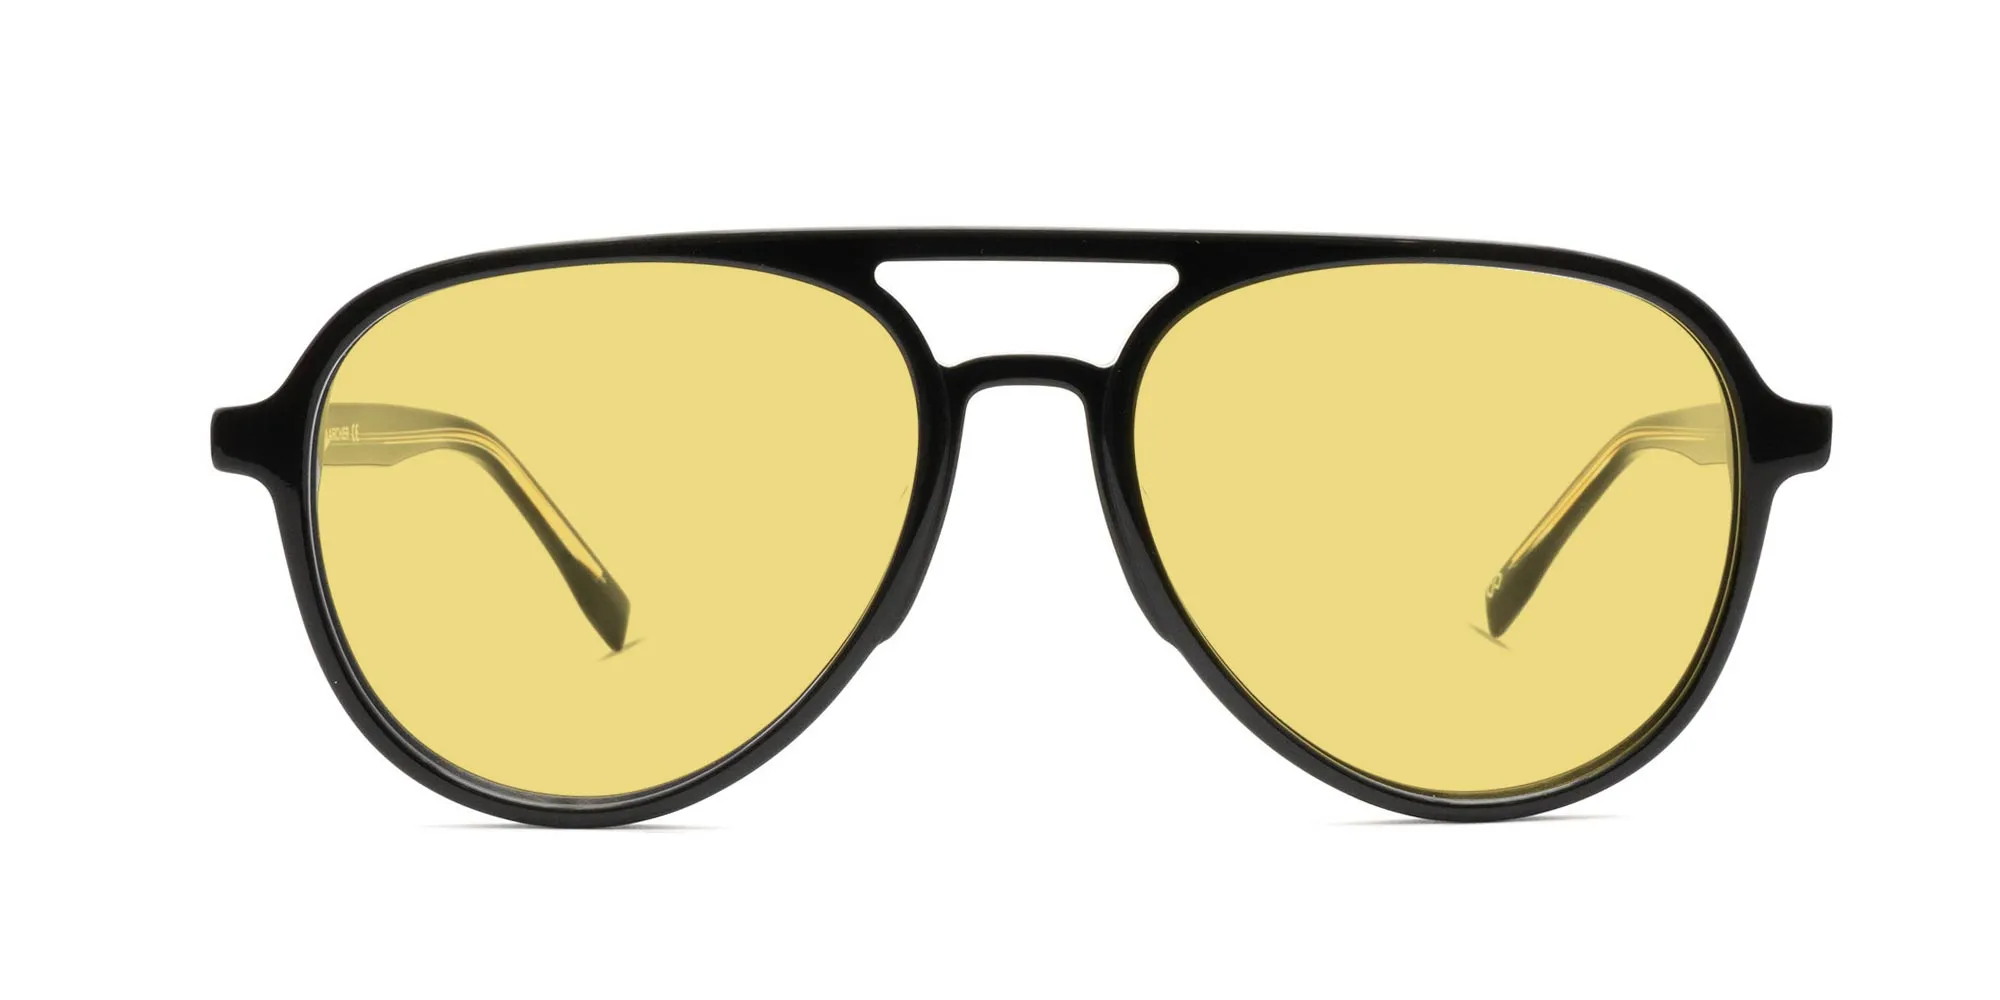 Pilot Sunglasses With Yellow Tint-2